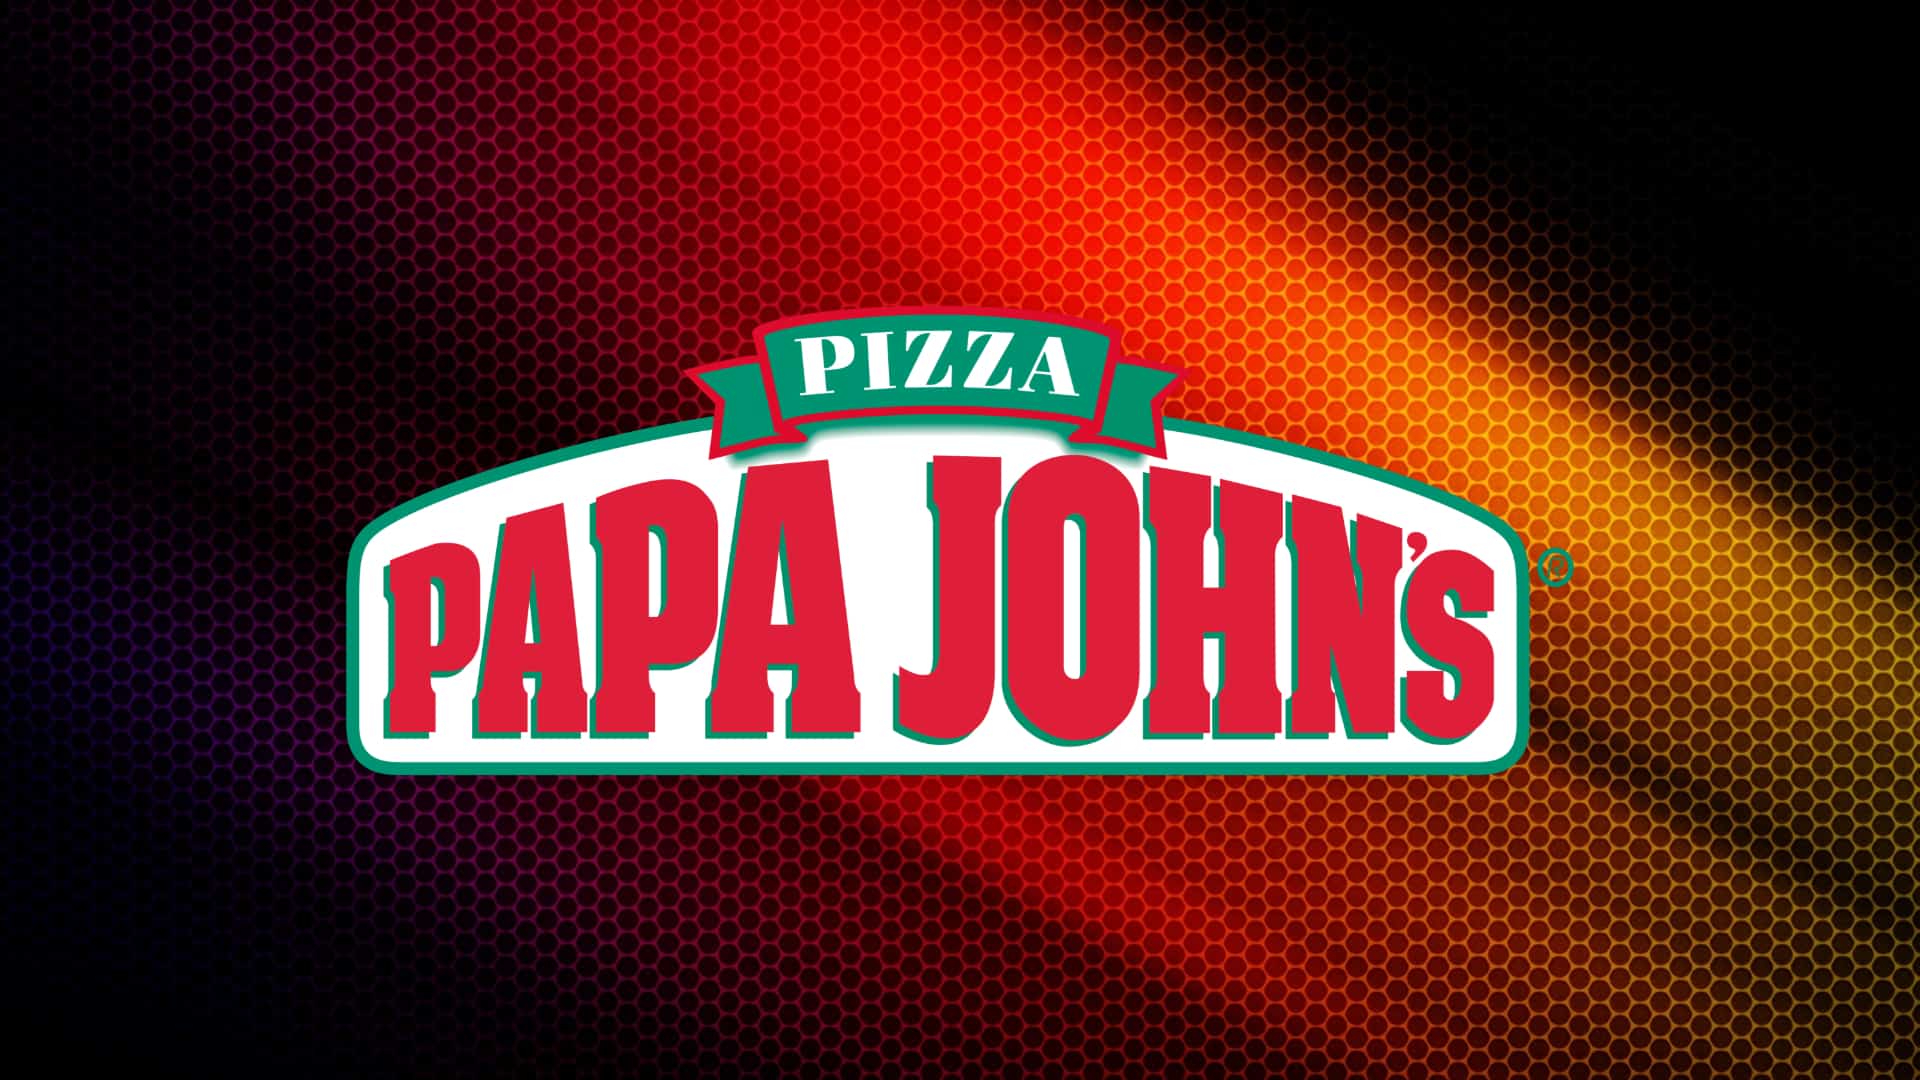 Free Papa Johns Pizza Coupon Code - How to get Free Papa ...